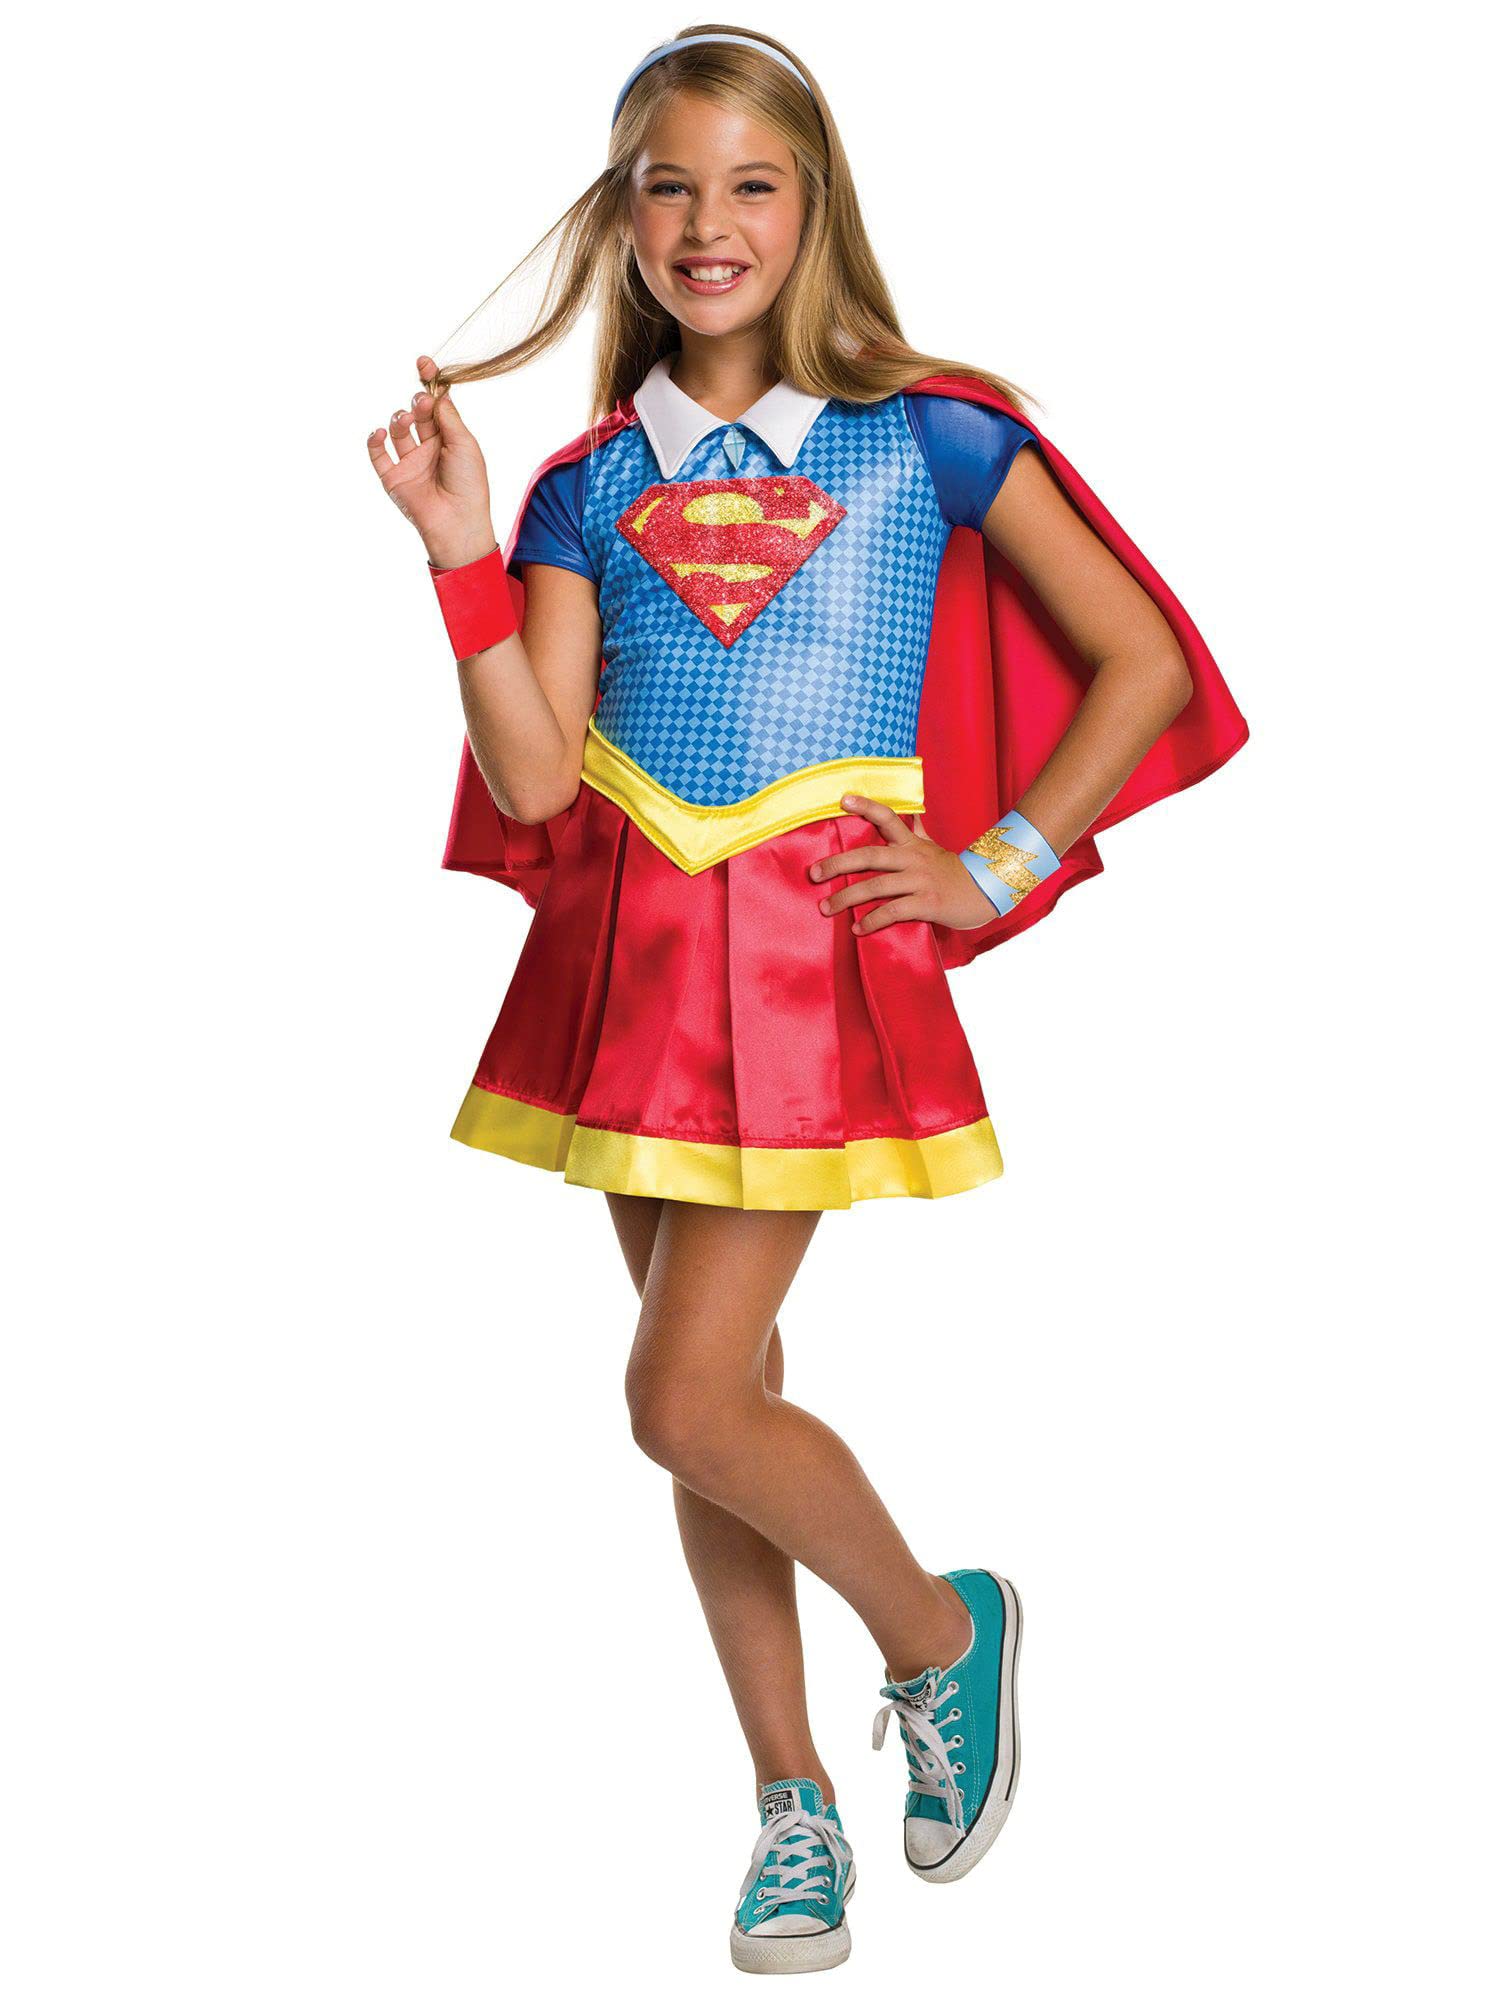 Rubie's 3620714 - DC Super Hero Girls Supergirl Deluxe Kinderkostüm